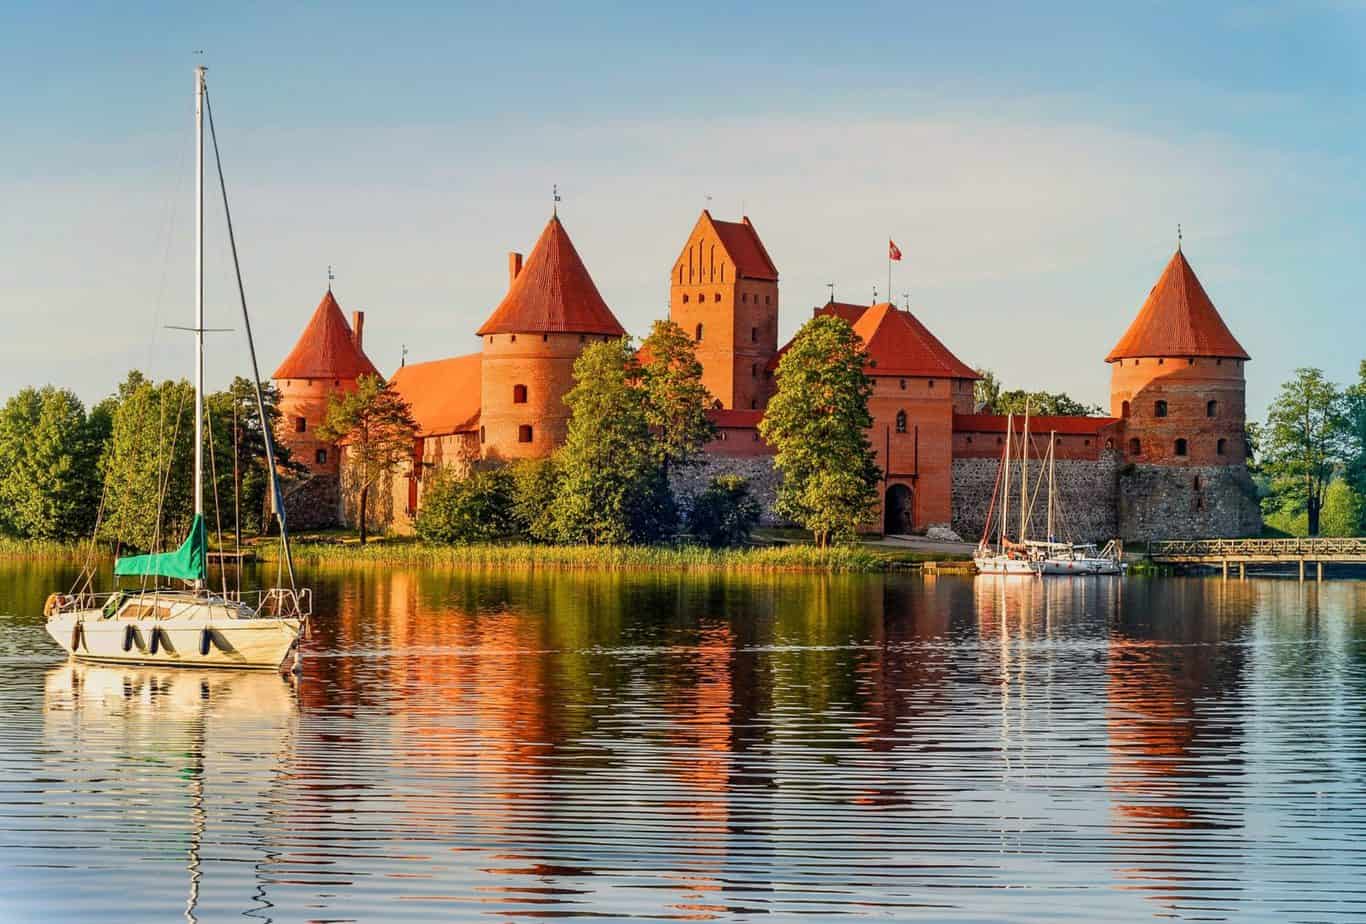 Trakai Castle – a popular tourist destination in Lithuania